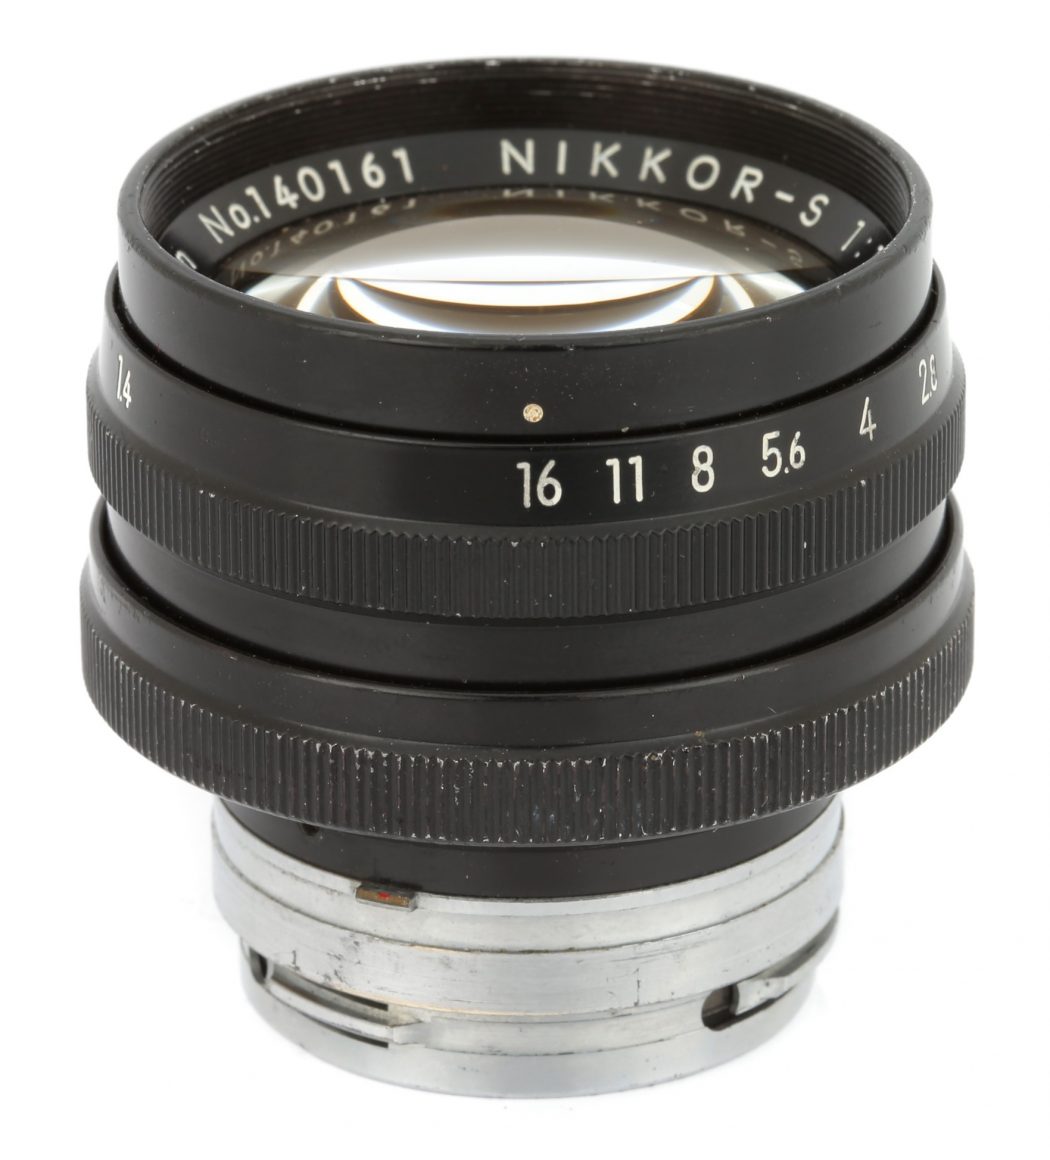 Nikon NIKKOR-S 50mm F/1.4